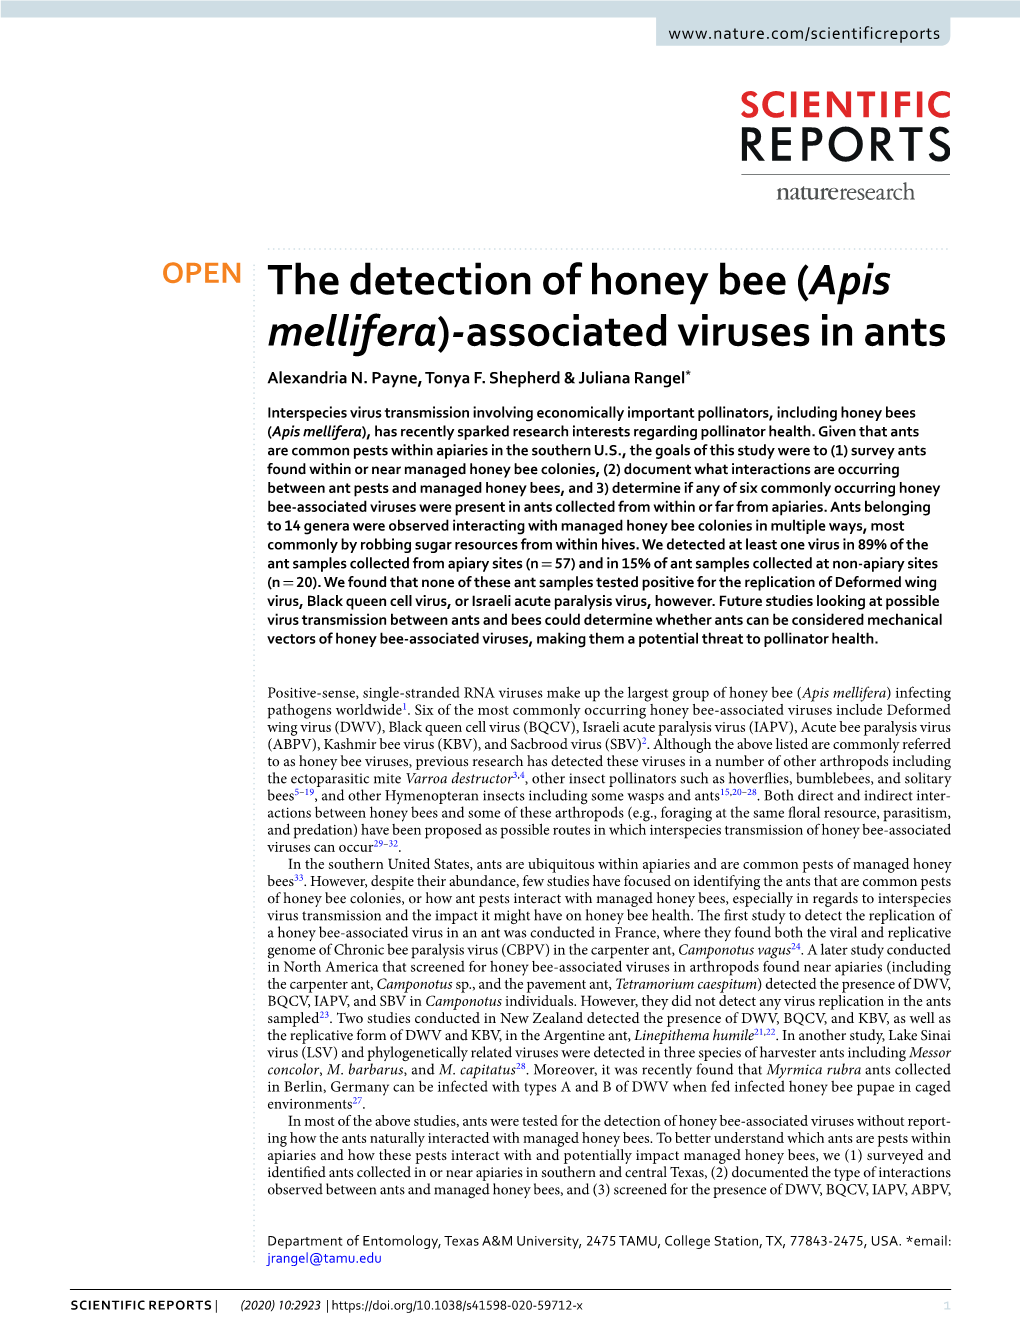 The Detection of Honey Bee (Apis Mellifera)-Associated Viruses in Ants Alexandria N